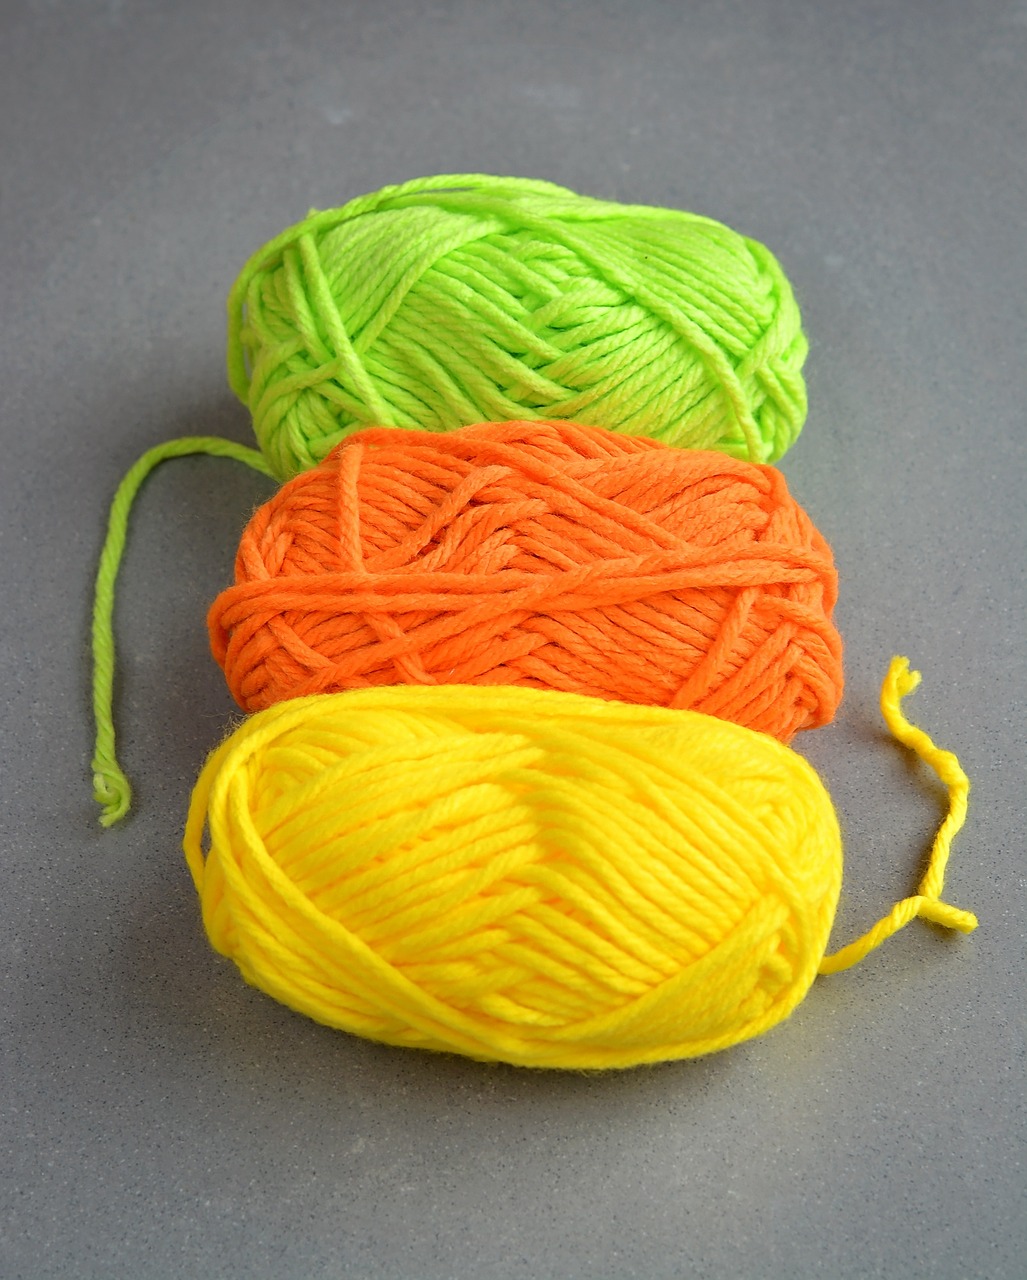 wool knitting supplies colorful free photo